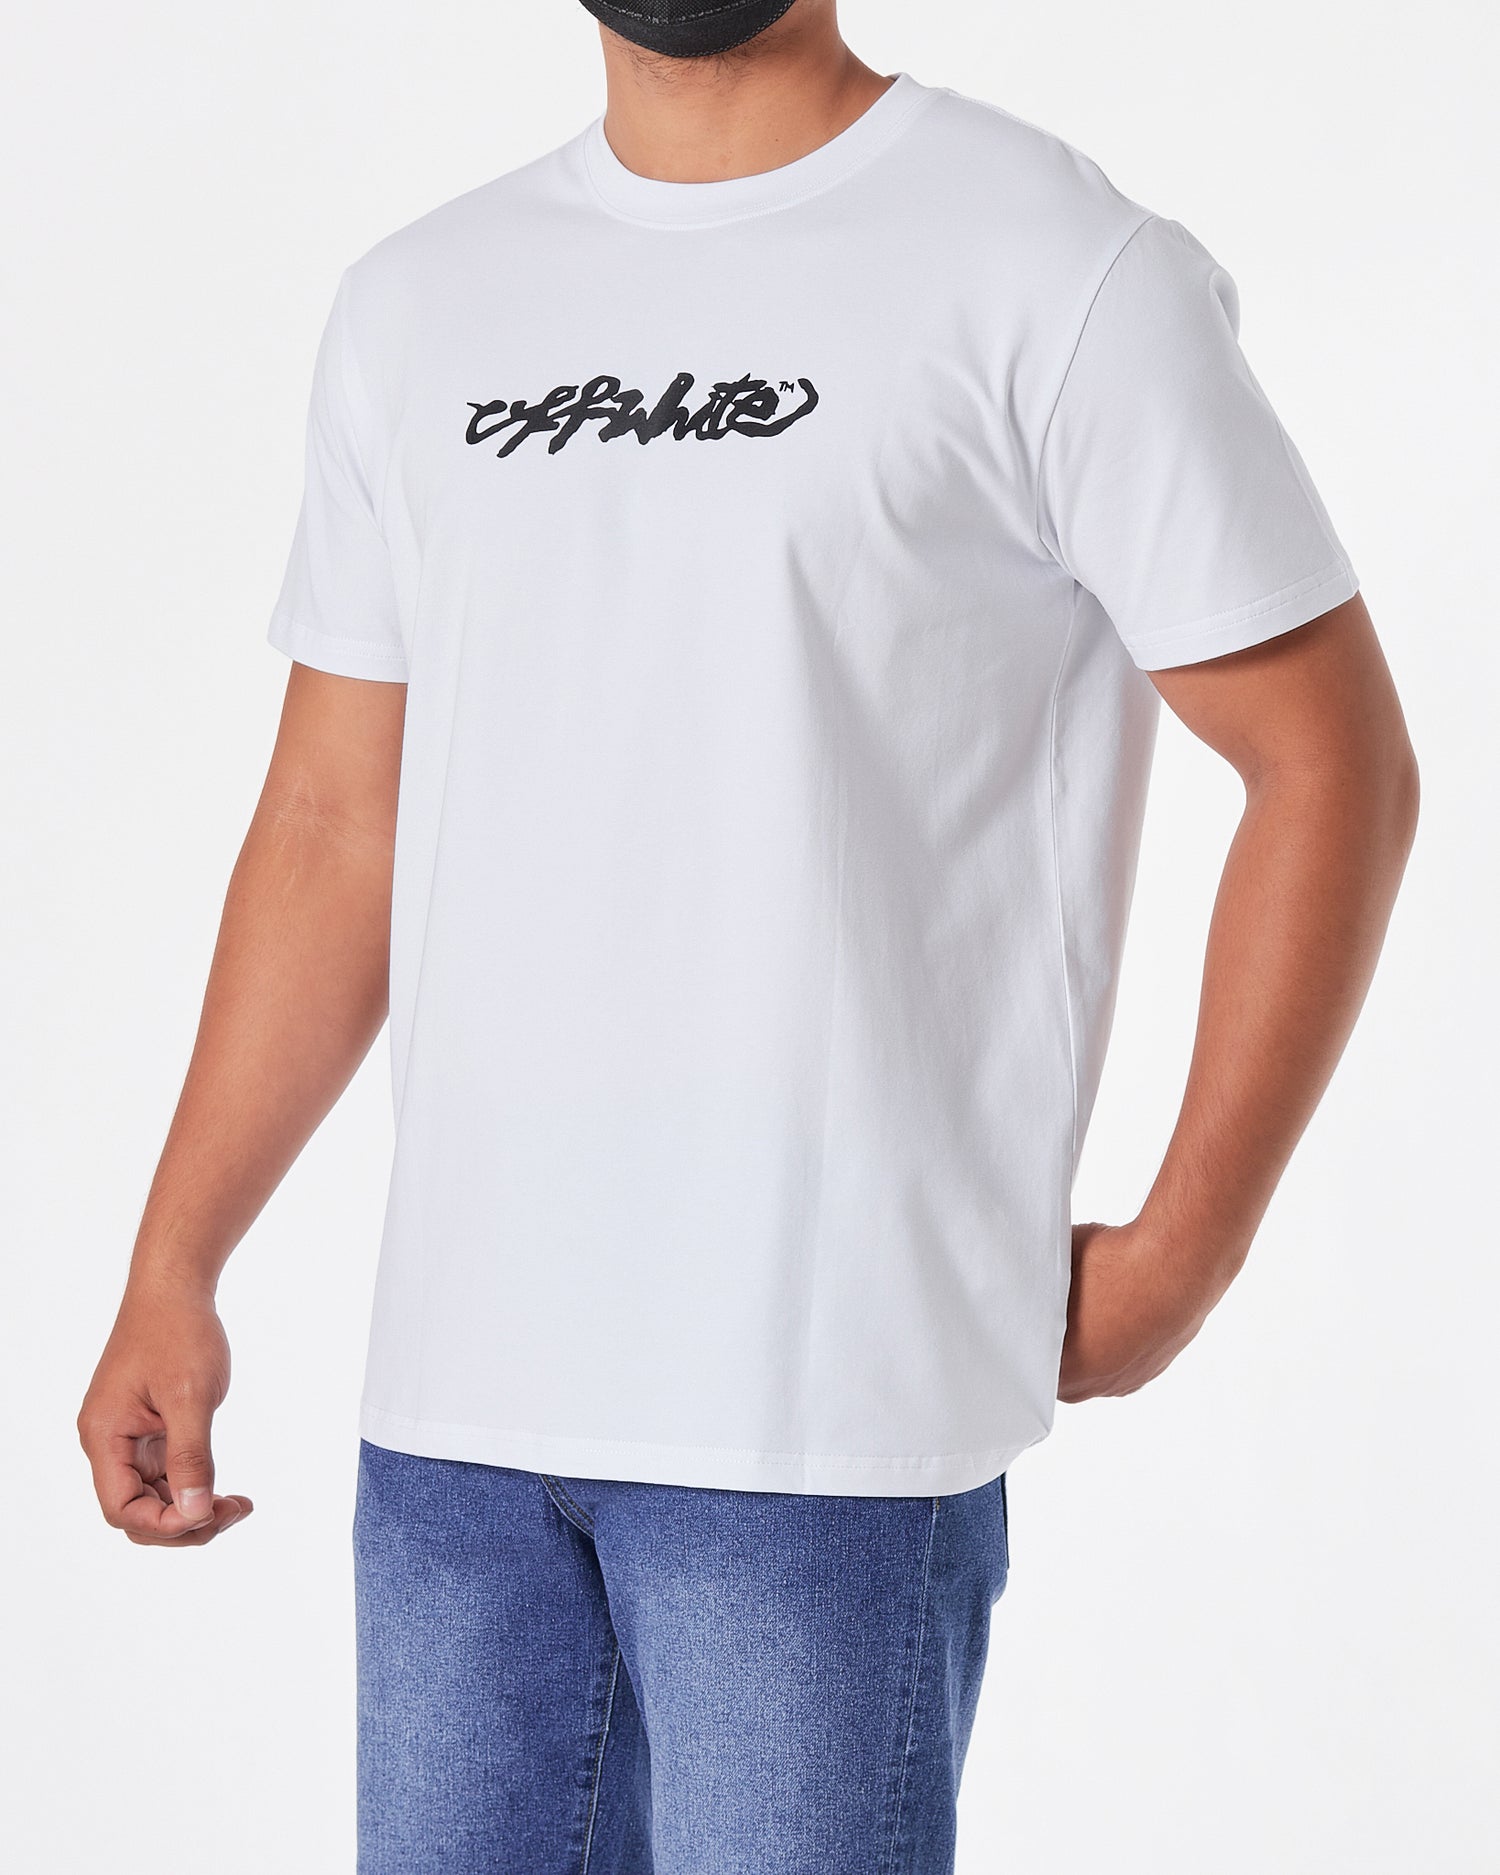 OW Arrow Back Printed Men White T-Shirt 17.90